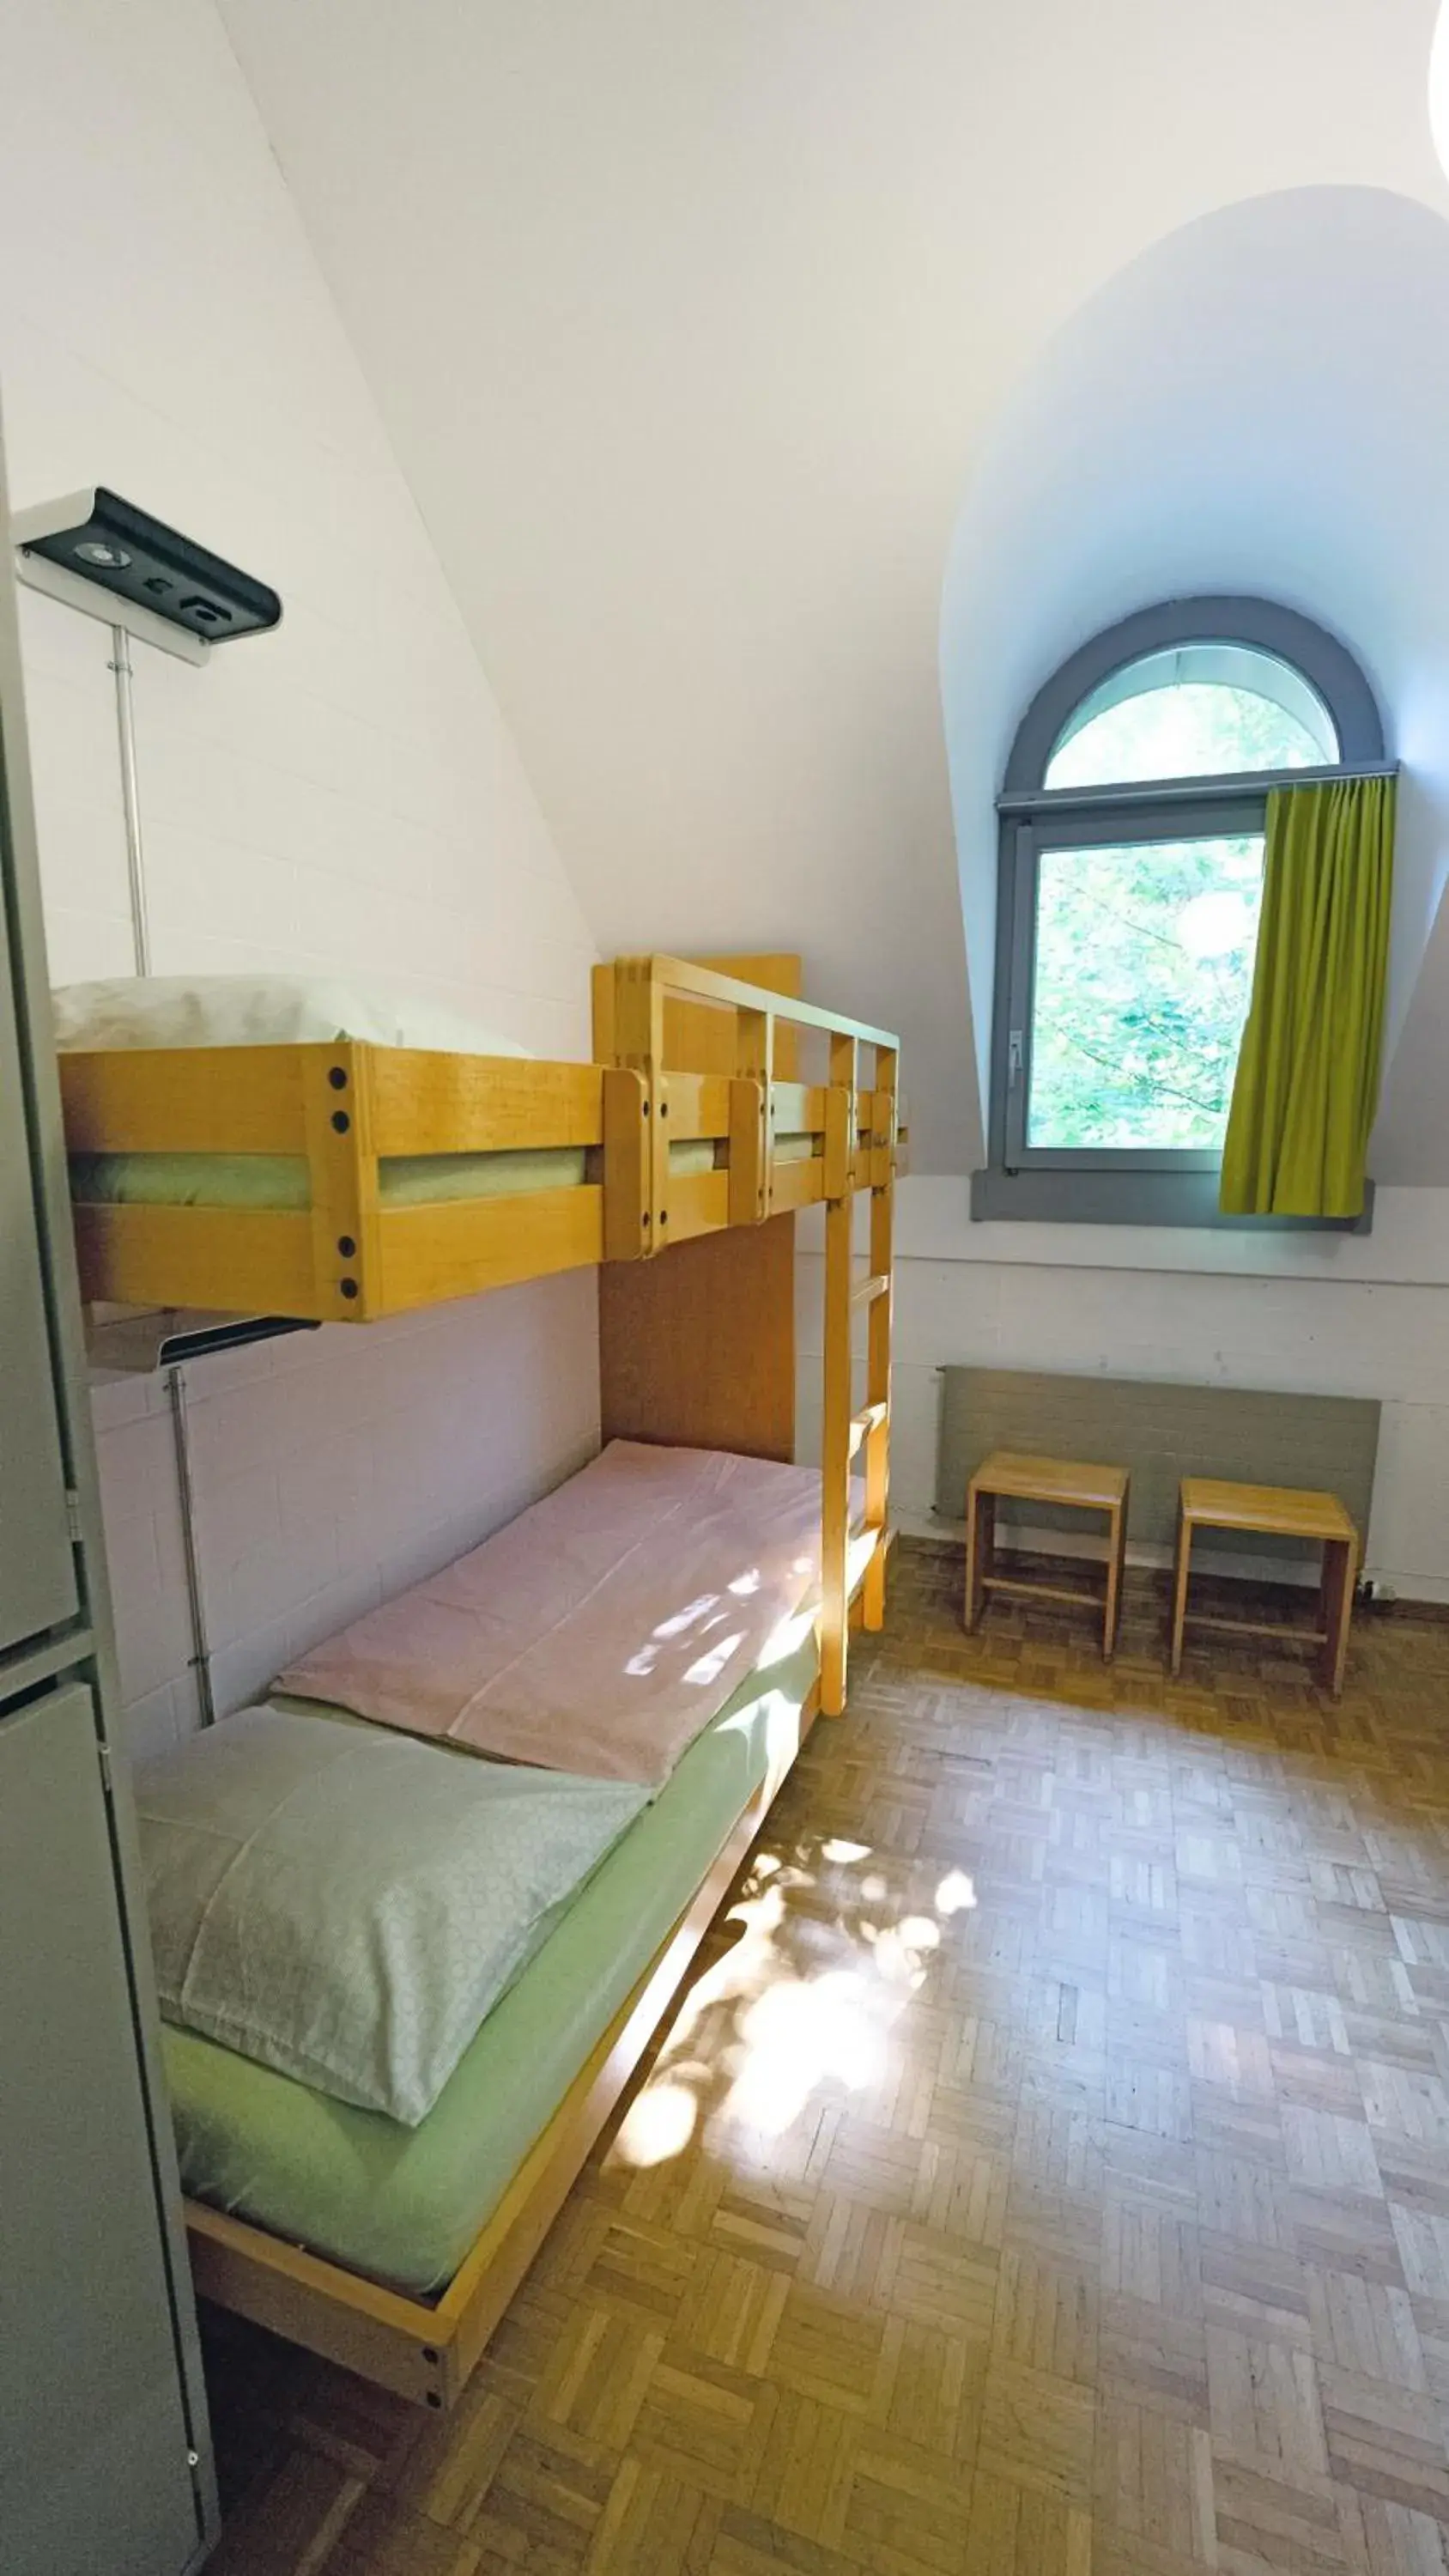 Bunk Bed in Luzern Youth Hostel